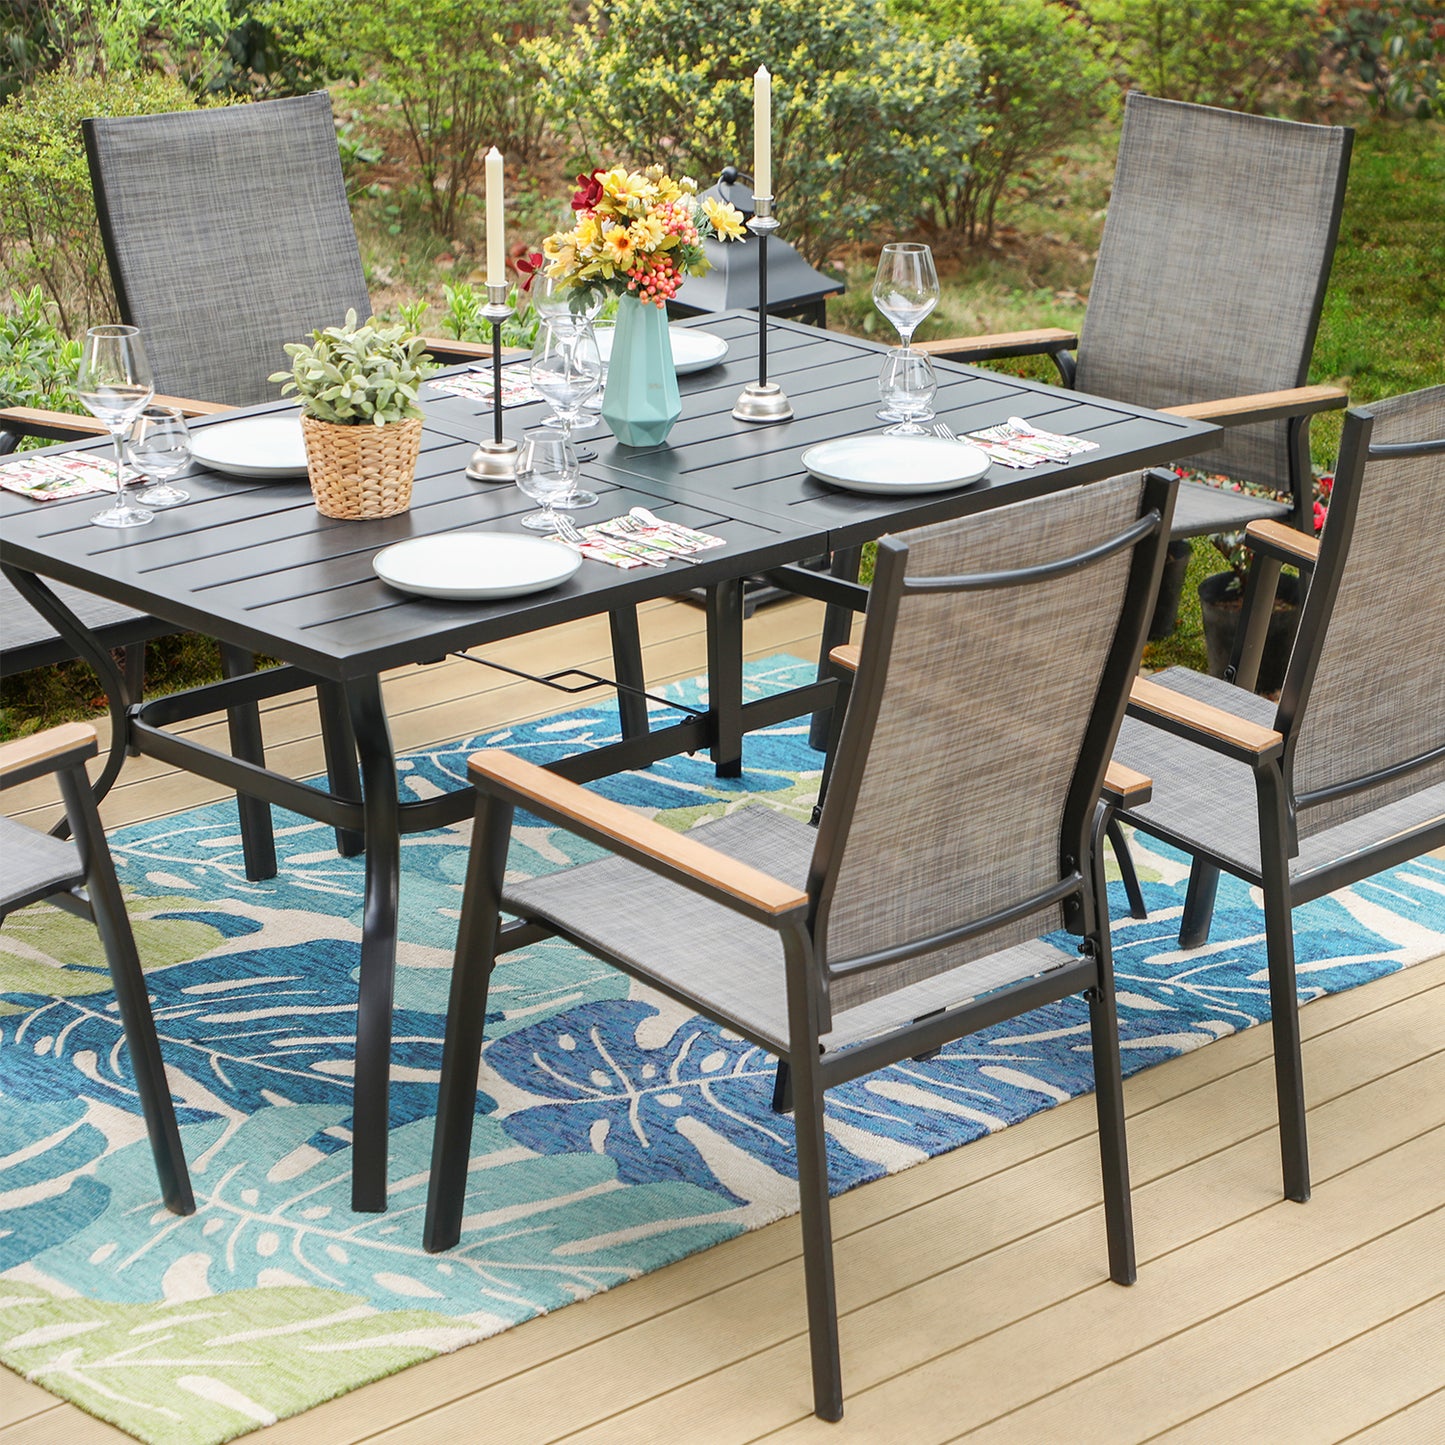 6 Seater Patio Set Metal Garden Table and Textilene Garden Chairs